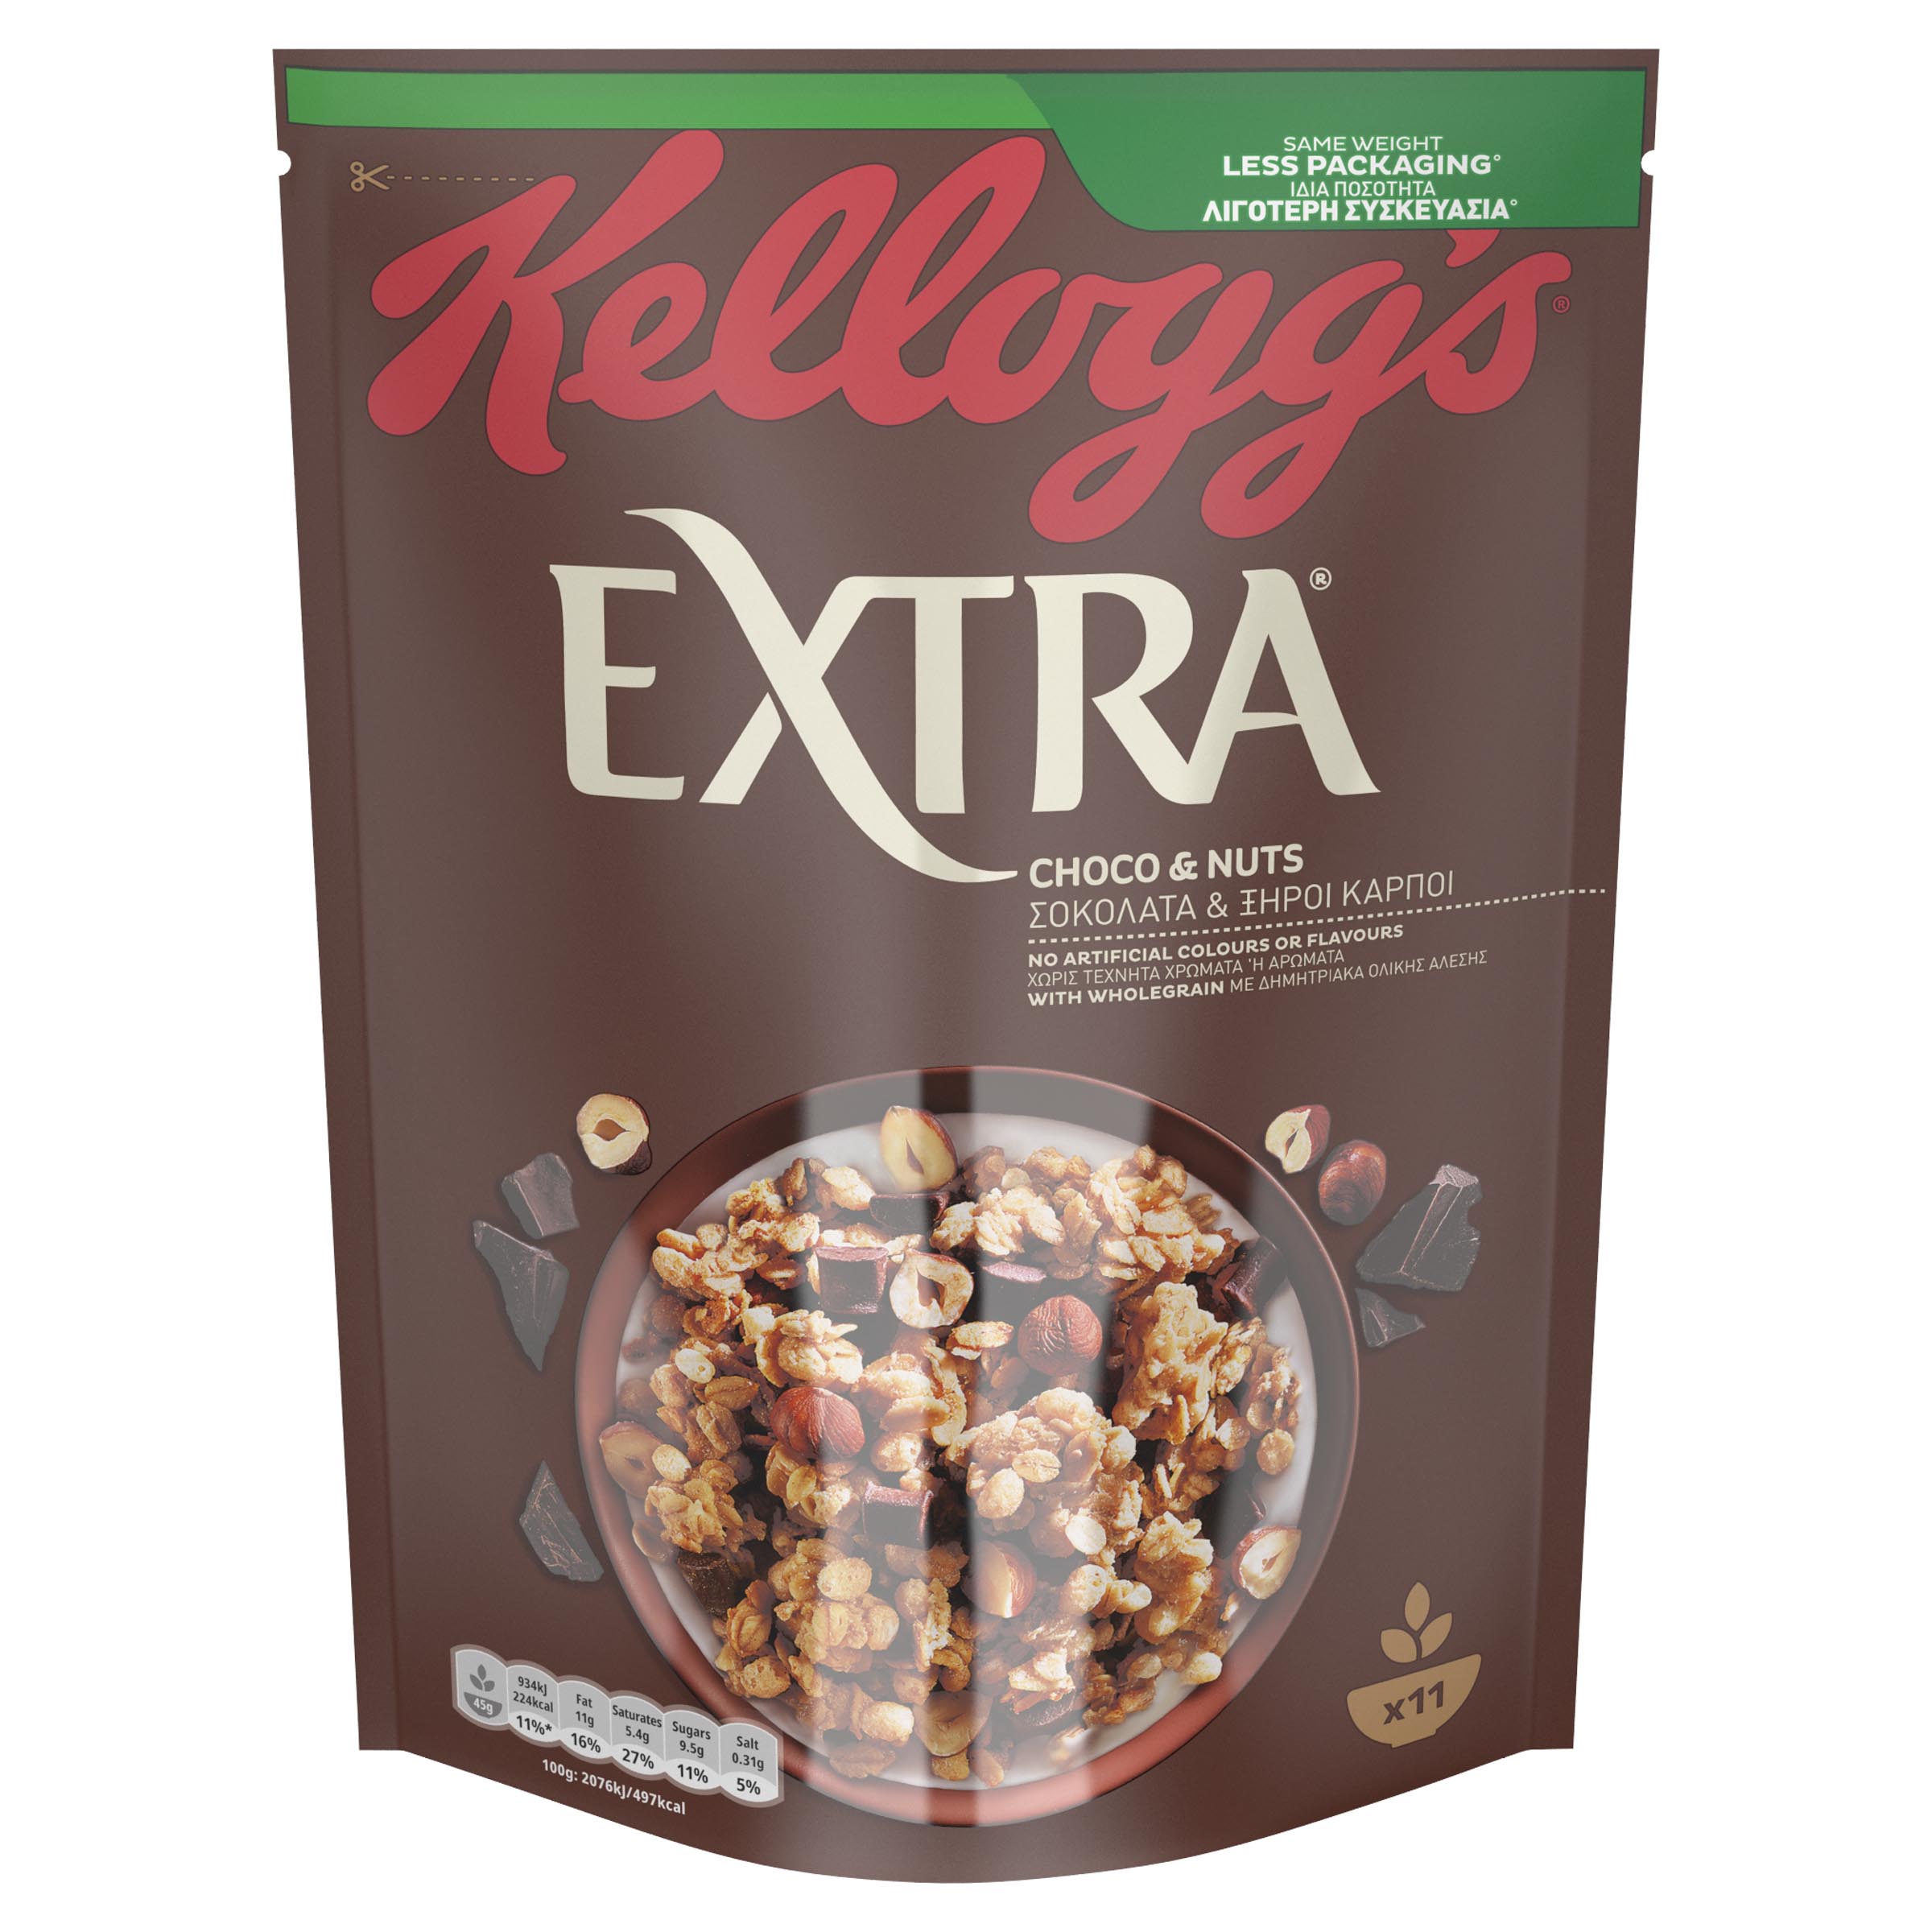 Choco nuts цена. Шоколадные мюсли Extra. Kellogg's Extra. Мюсли Kellogg's. Гранола Kellogg s Extra.